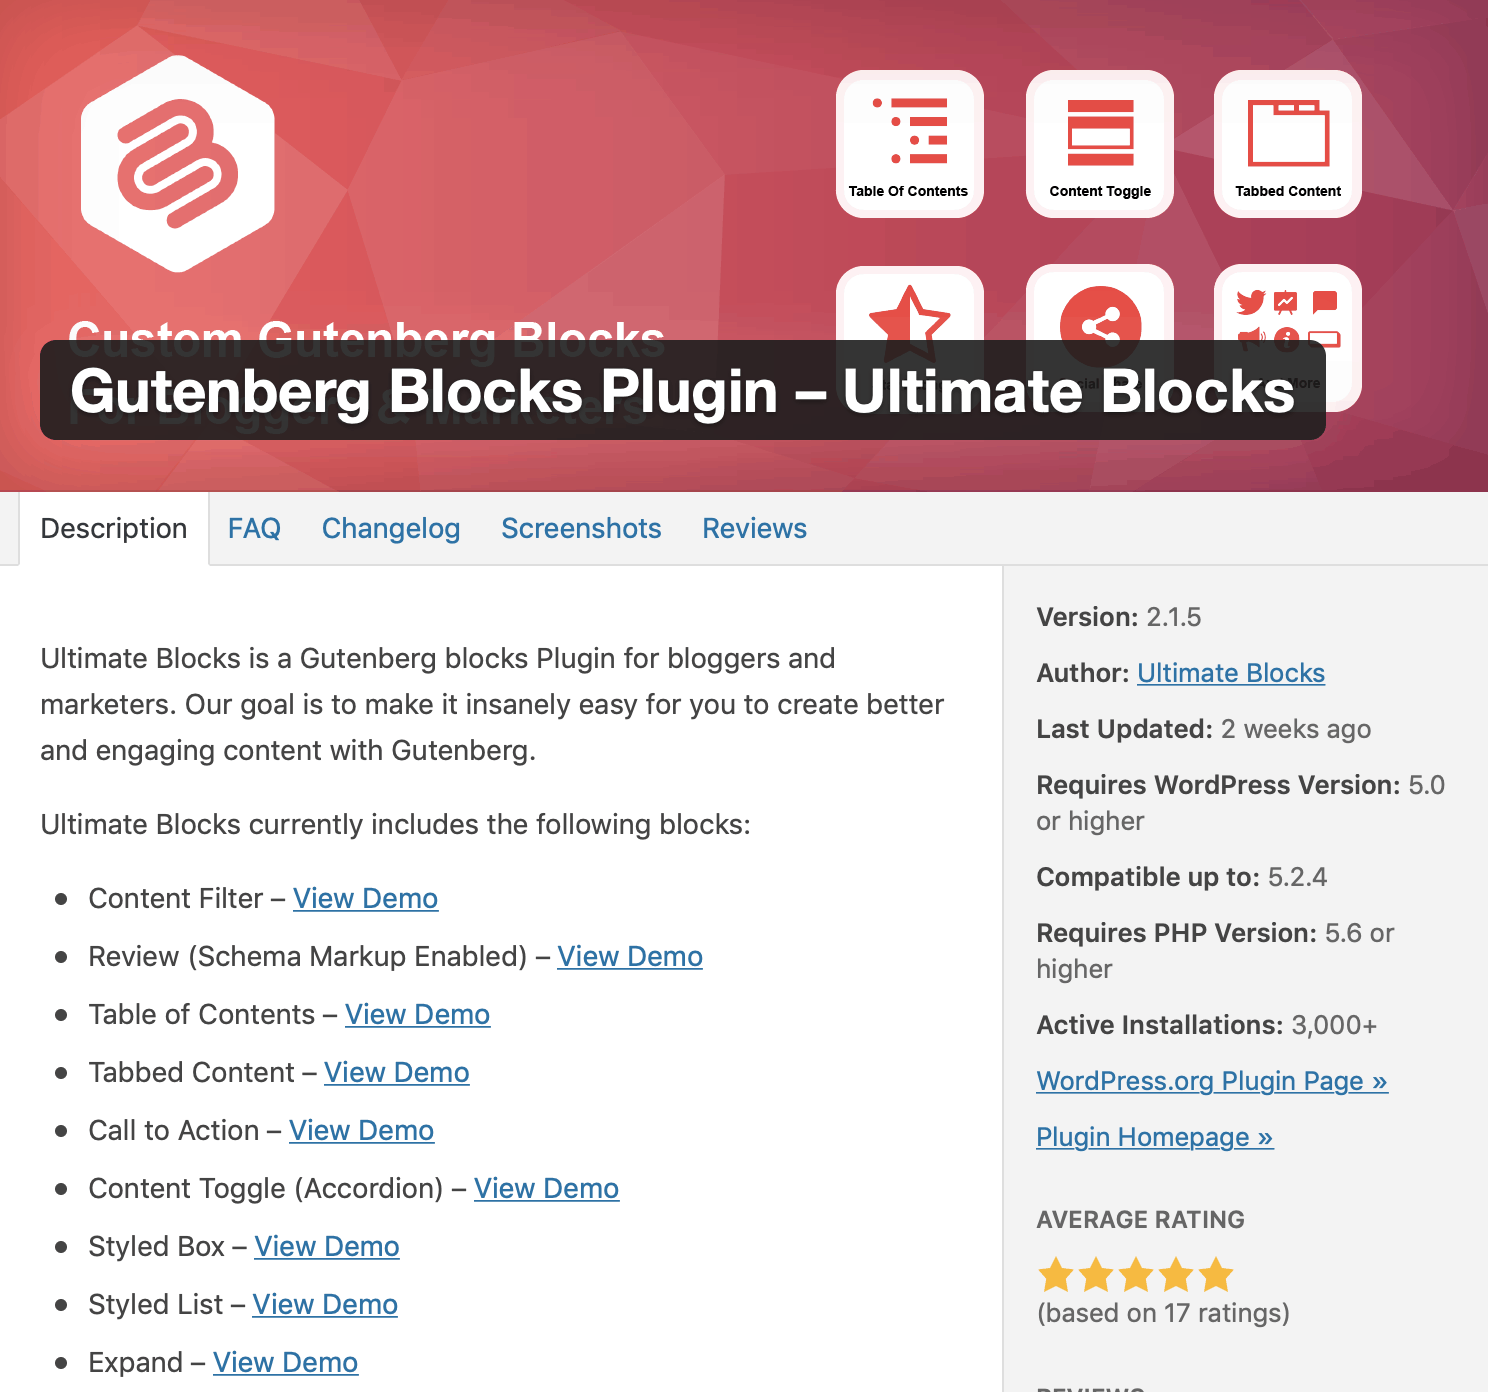 gutenberrg blocks plugin ultimate blocks